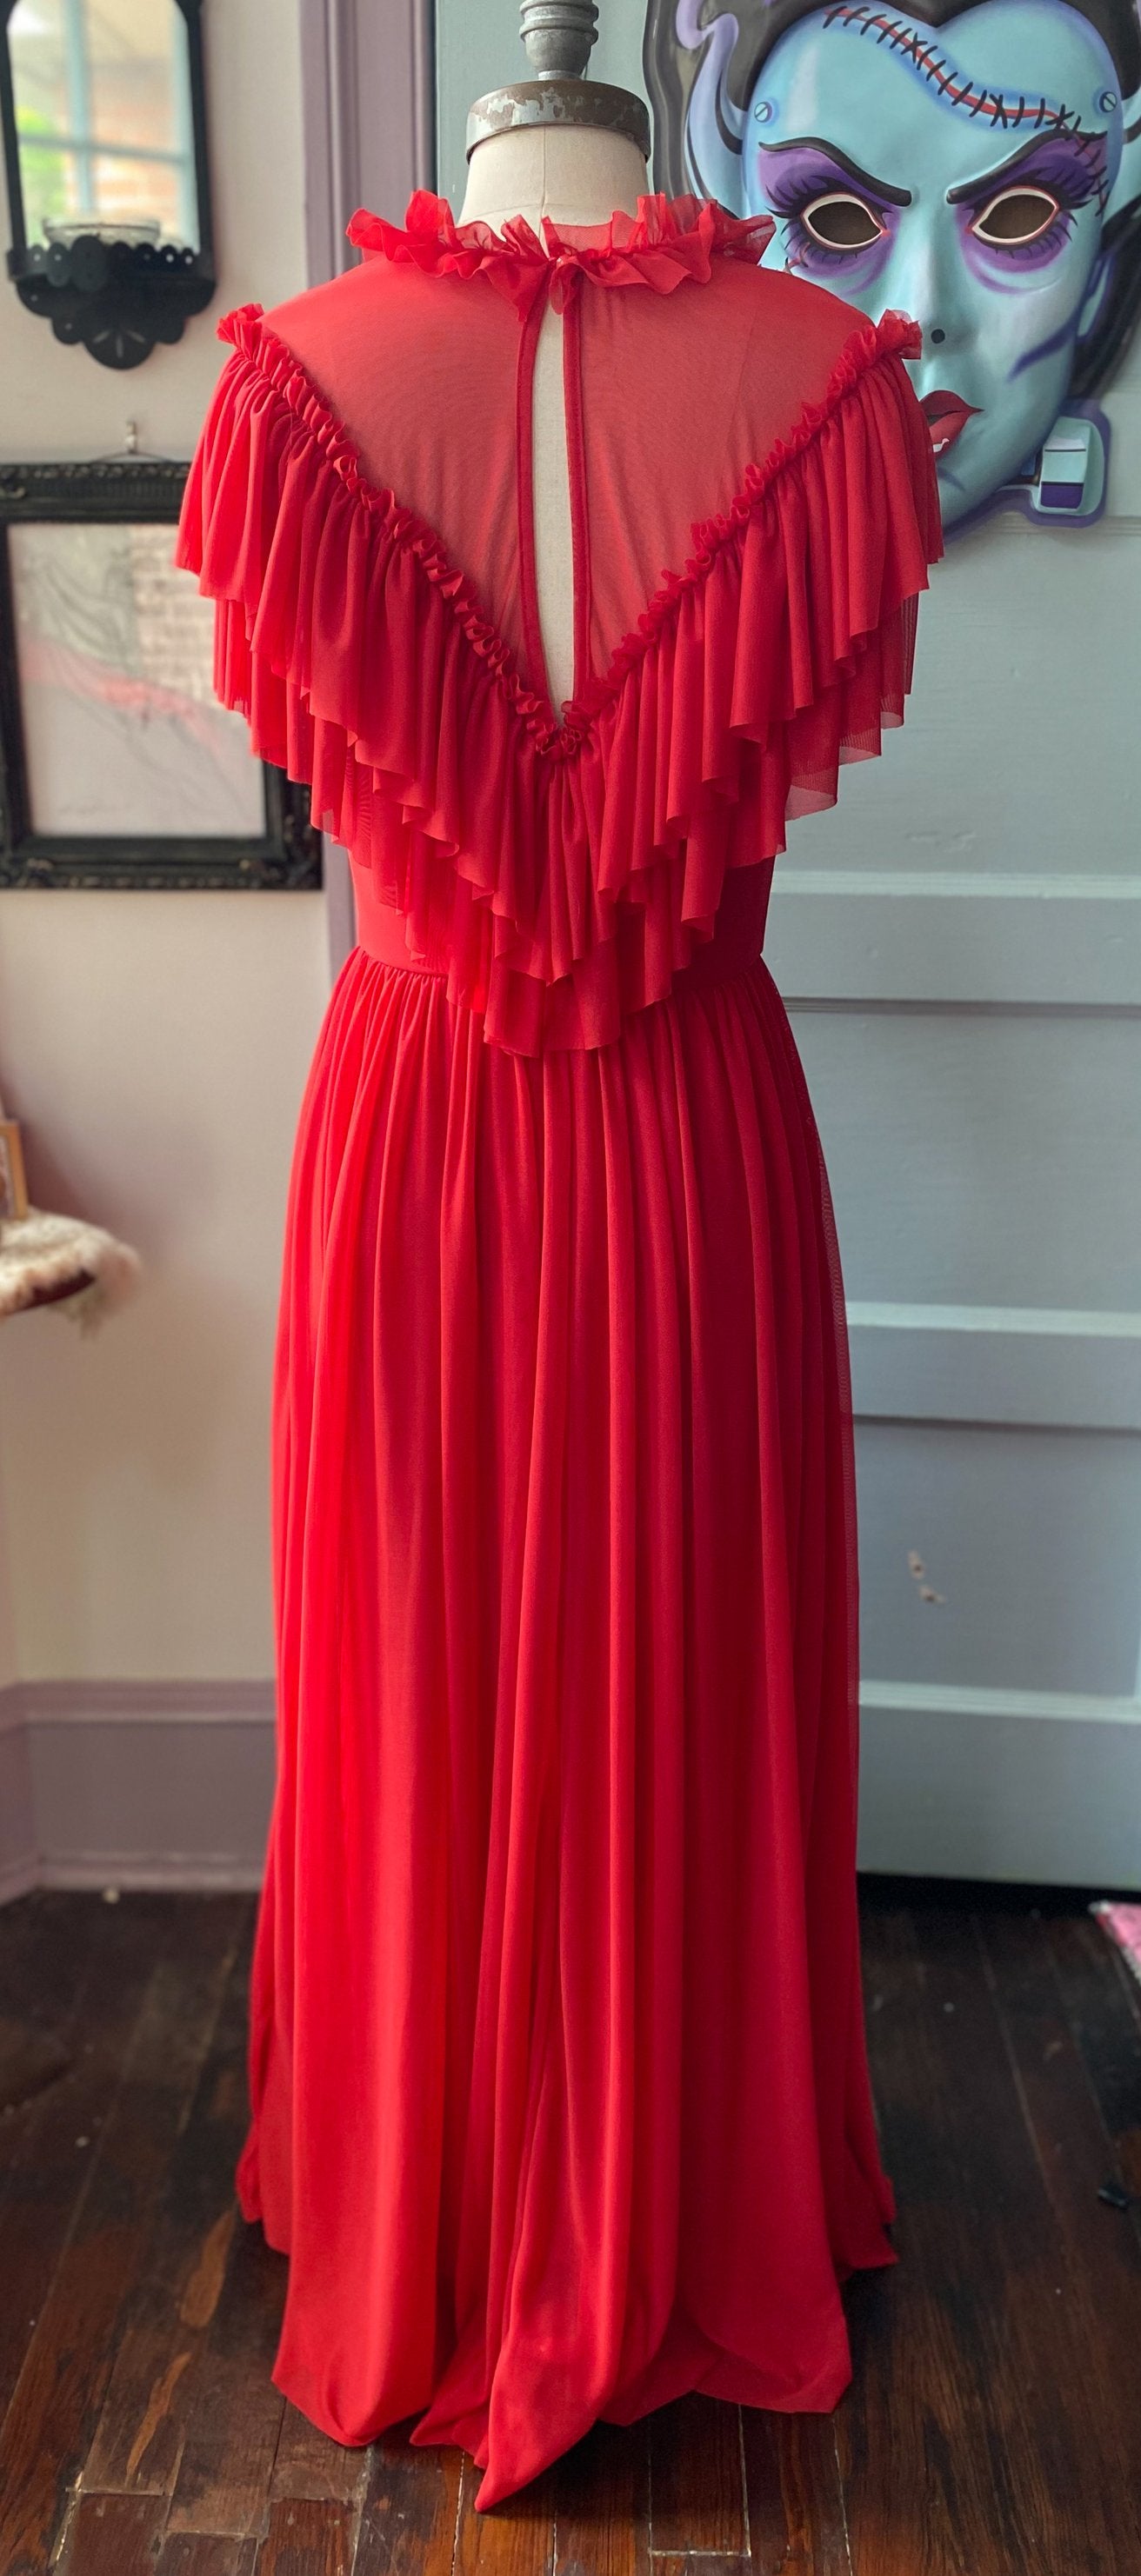 Mina Dress in Red Wax Poetic lana rose fashion wednesday addams lydia